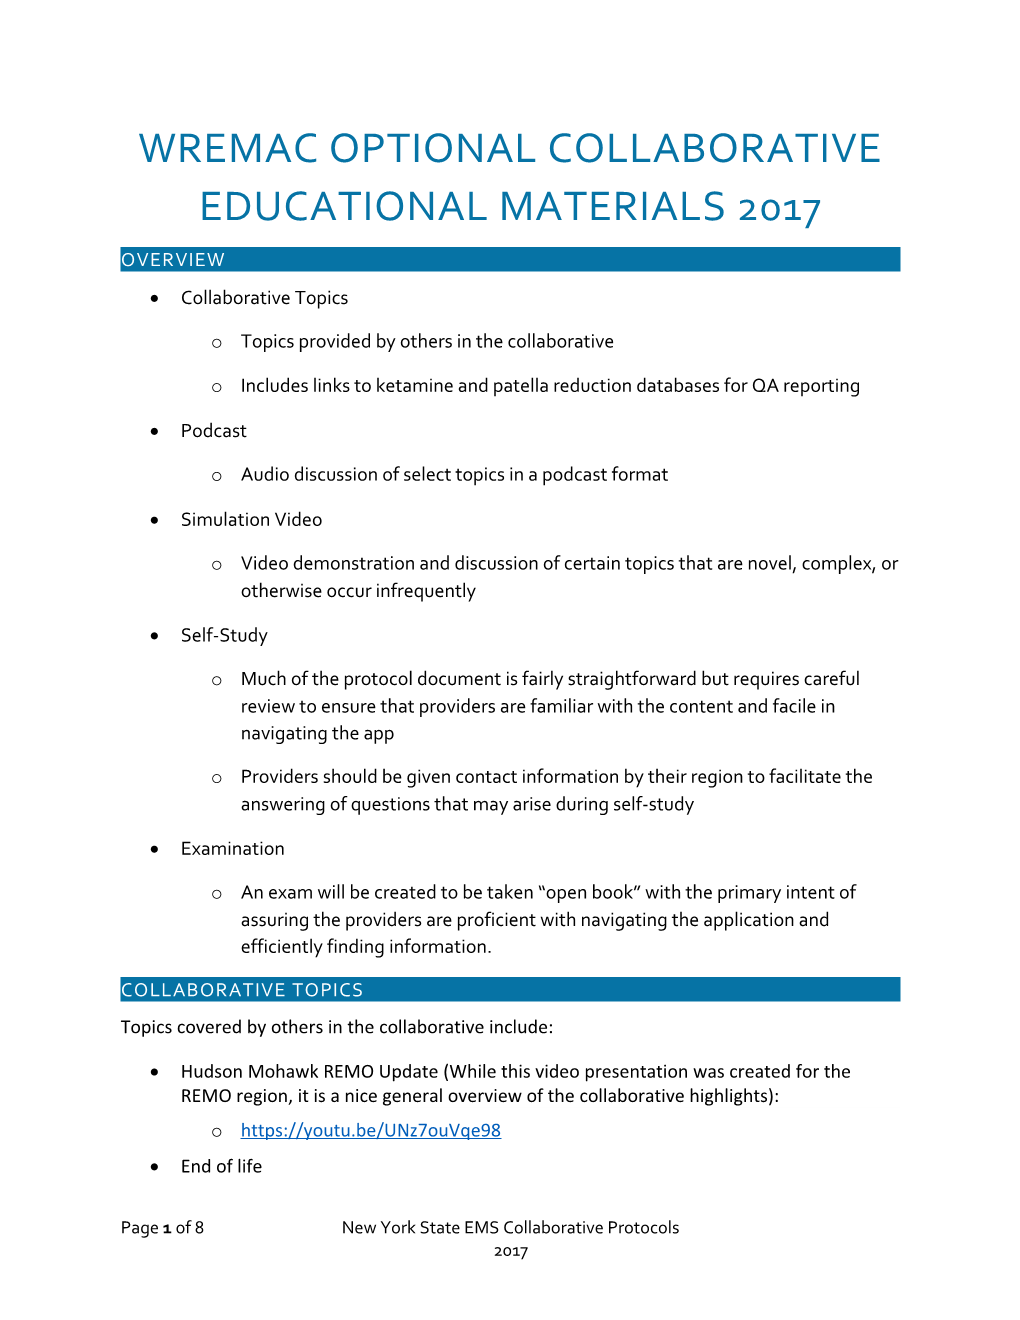 WREMAC Optional Collaborative Educational Materials 2017